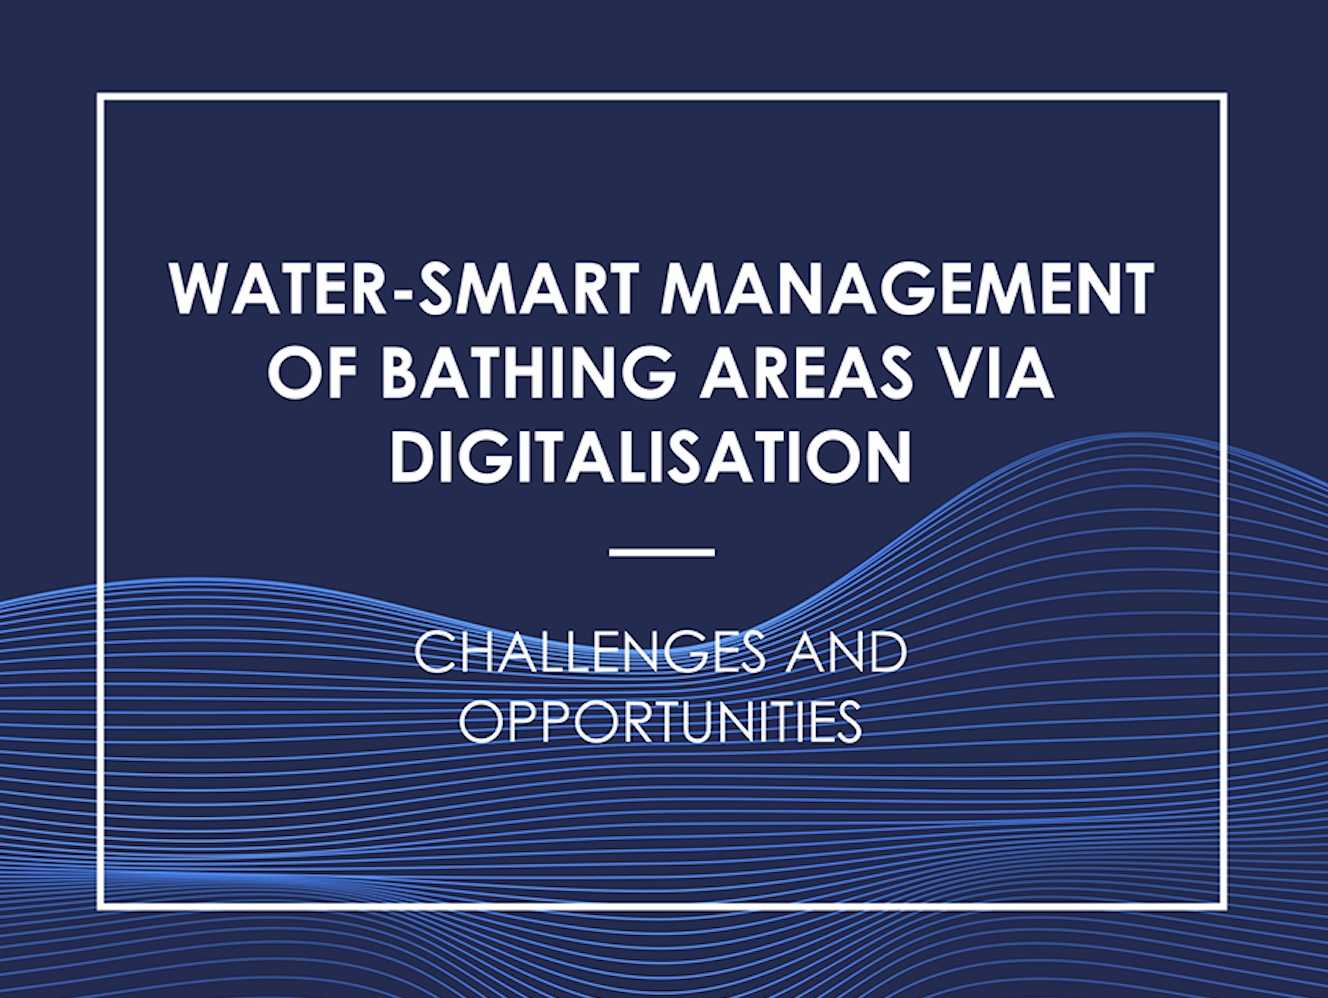 Workshop on the digitalisation of bathing water management